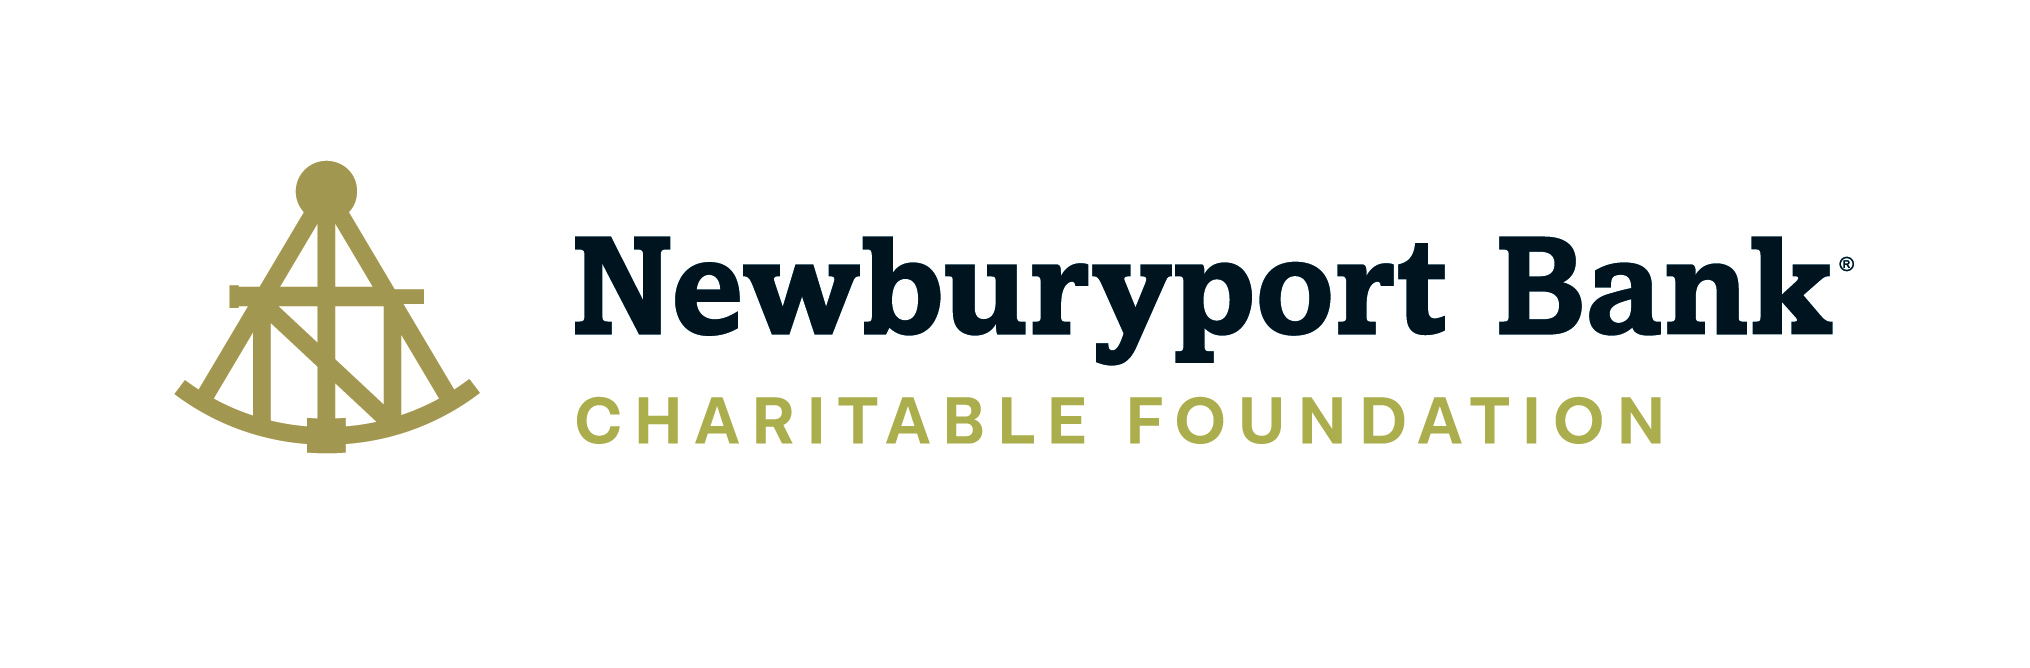 Newburyport Bank Charitable Foundation